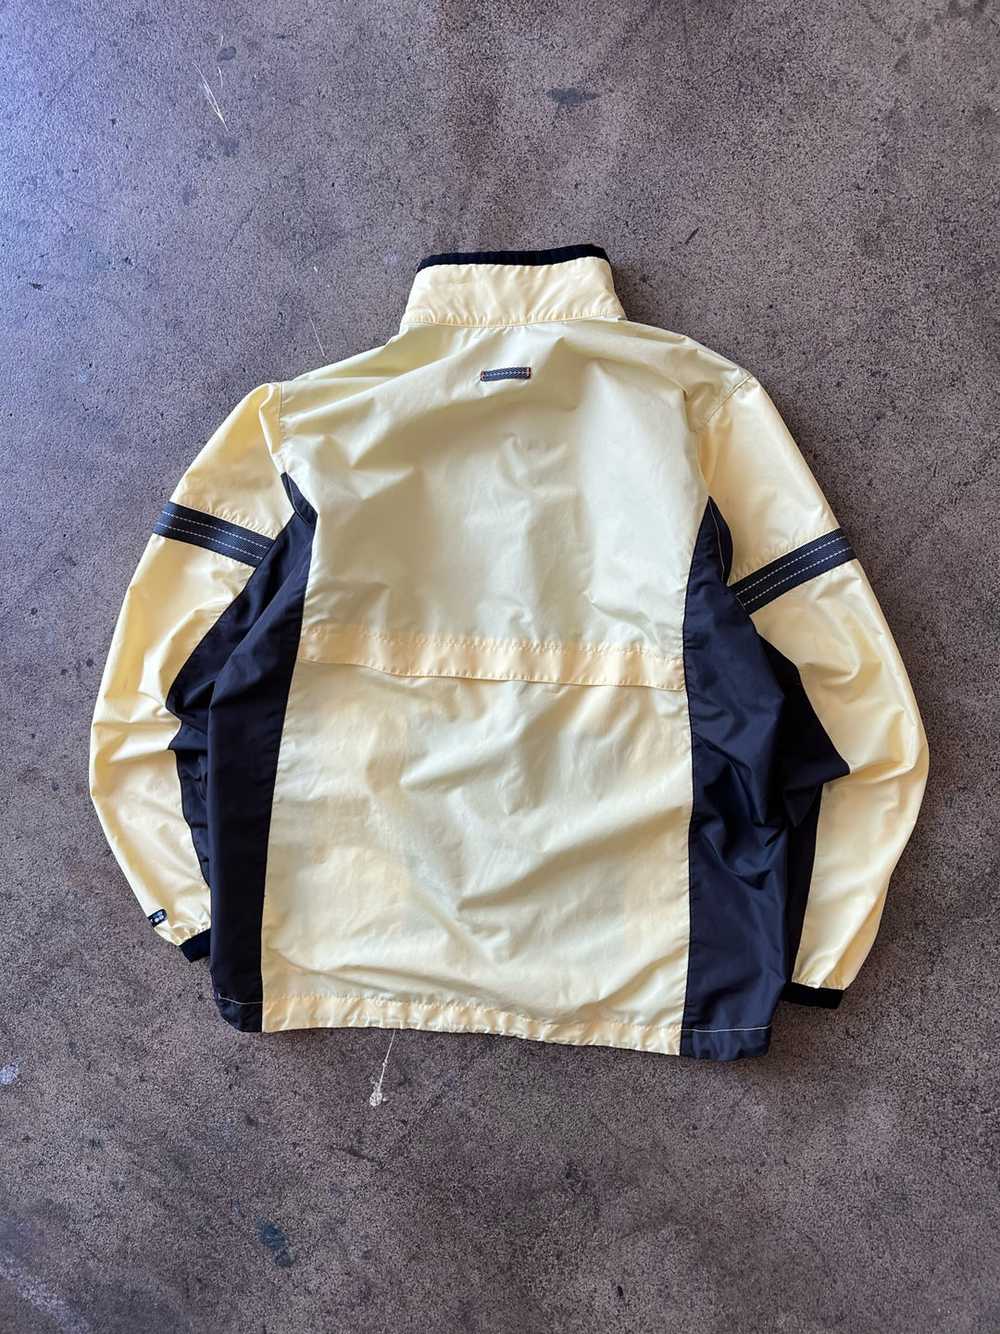 1990s Nike Soft Yellow Running Jacket - image 4